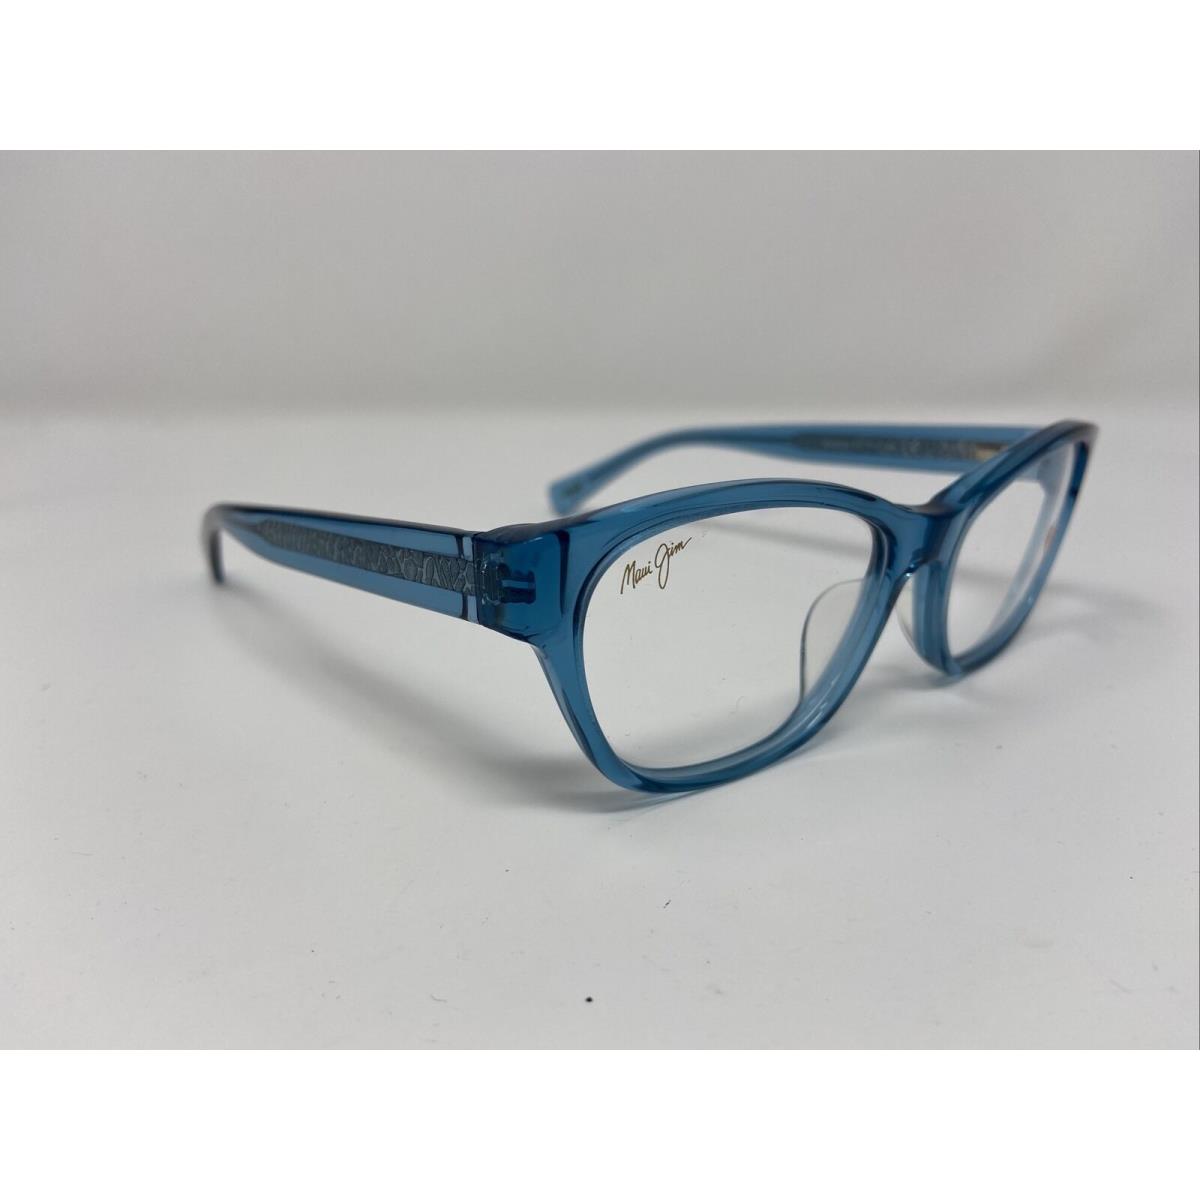 Maui Jim eyeglasses  - Blue Frame 2